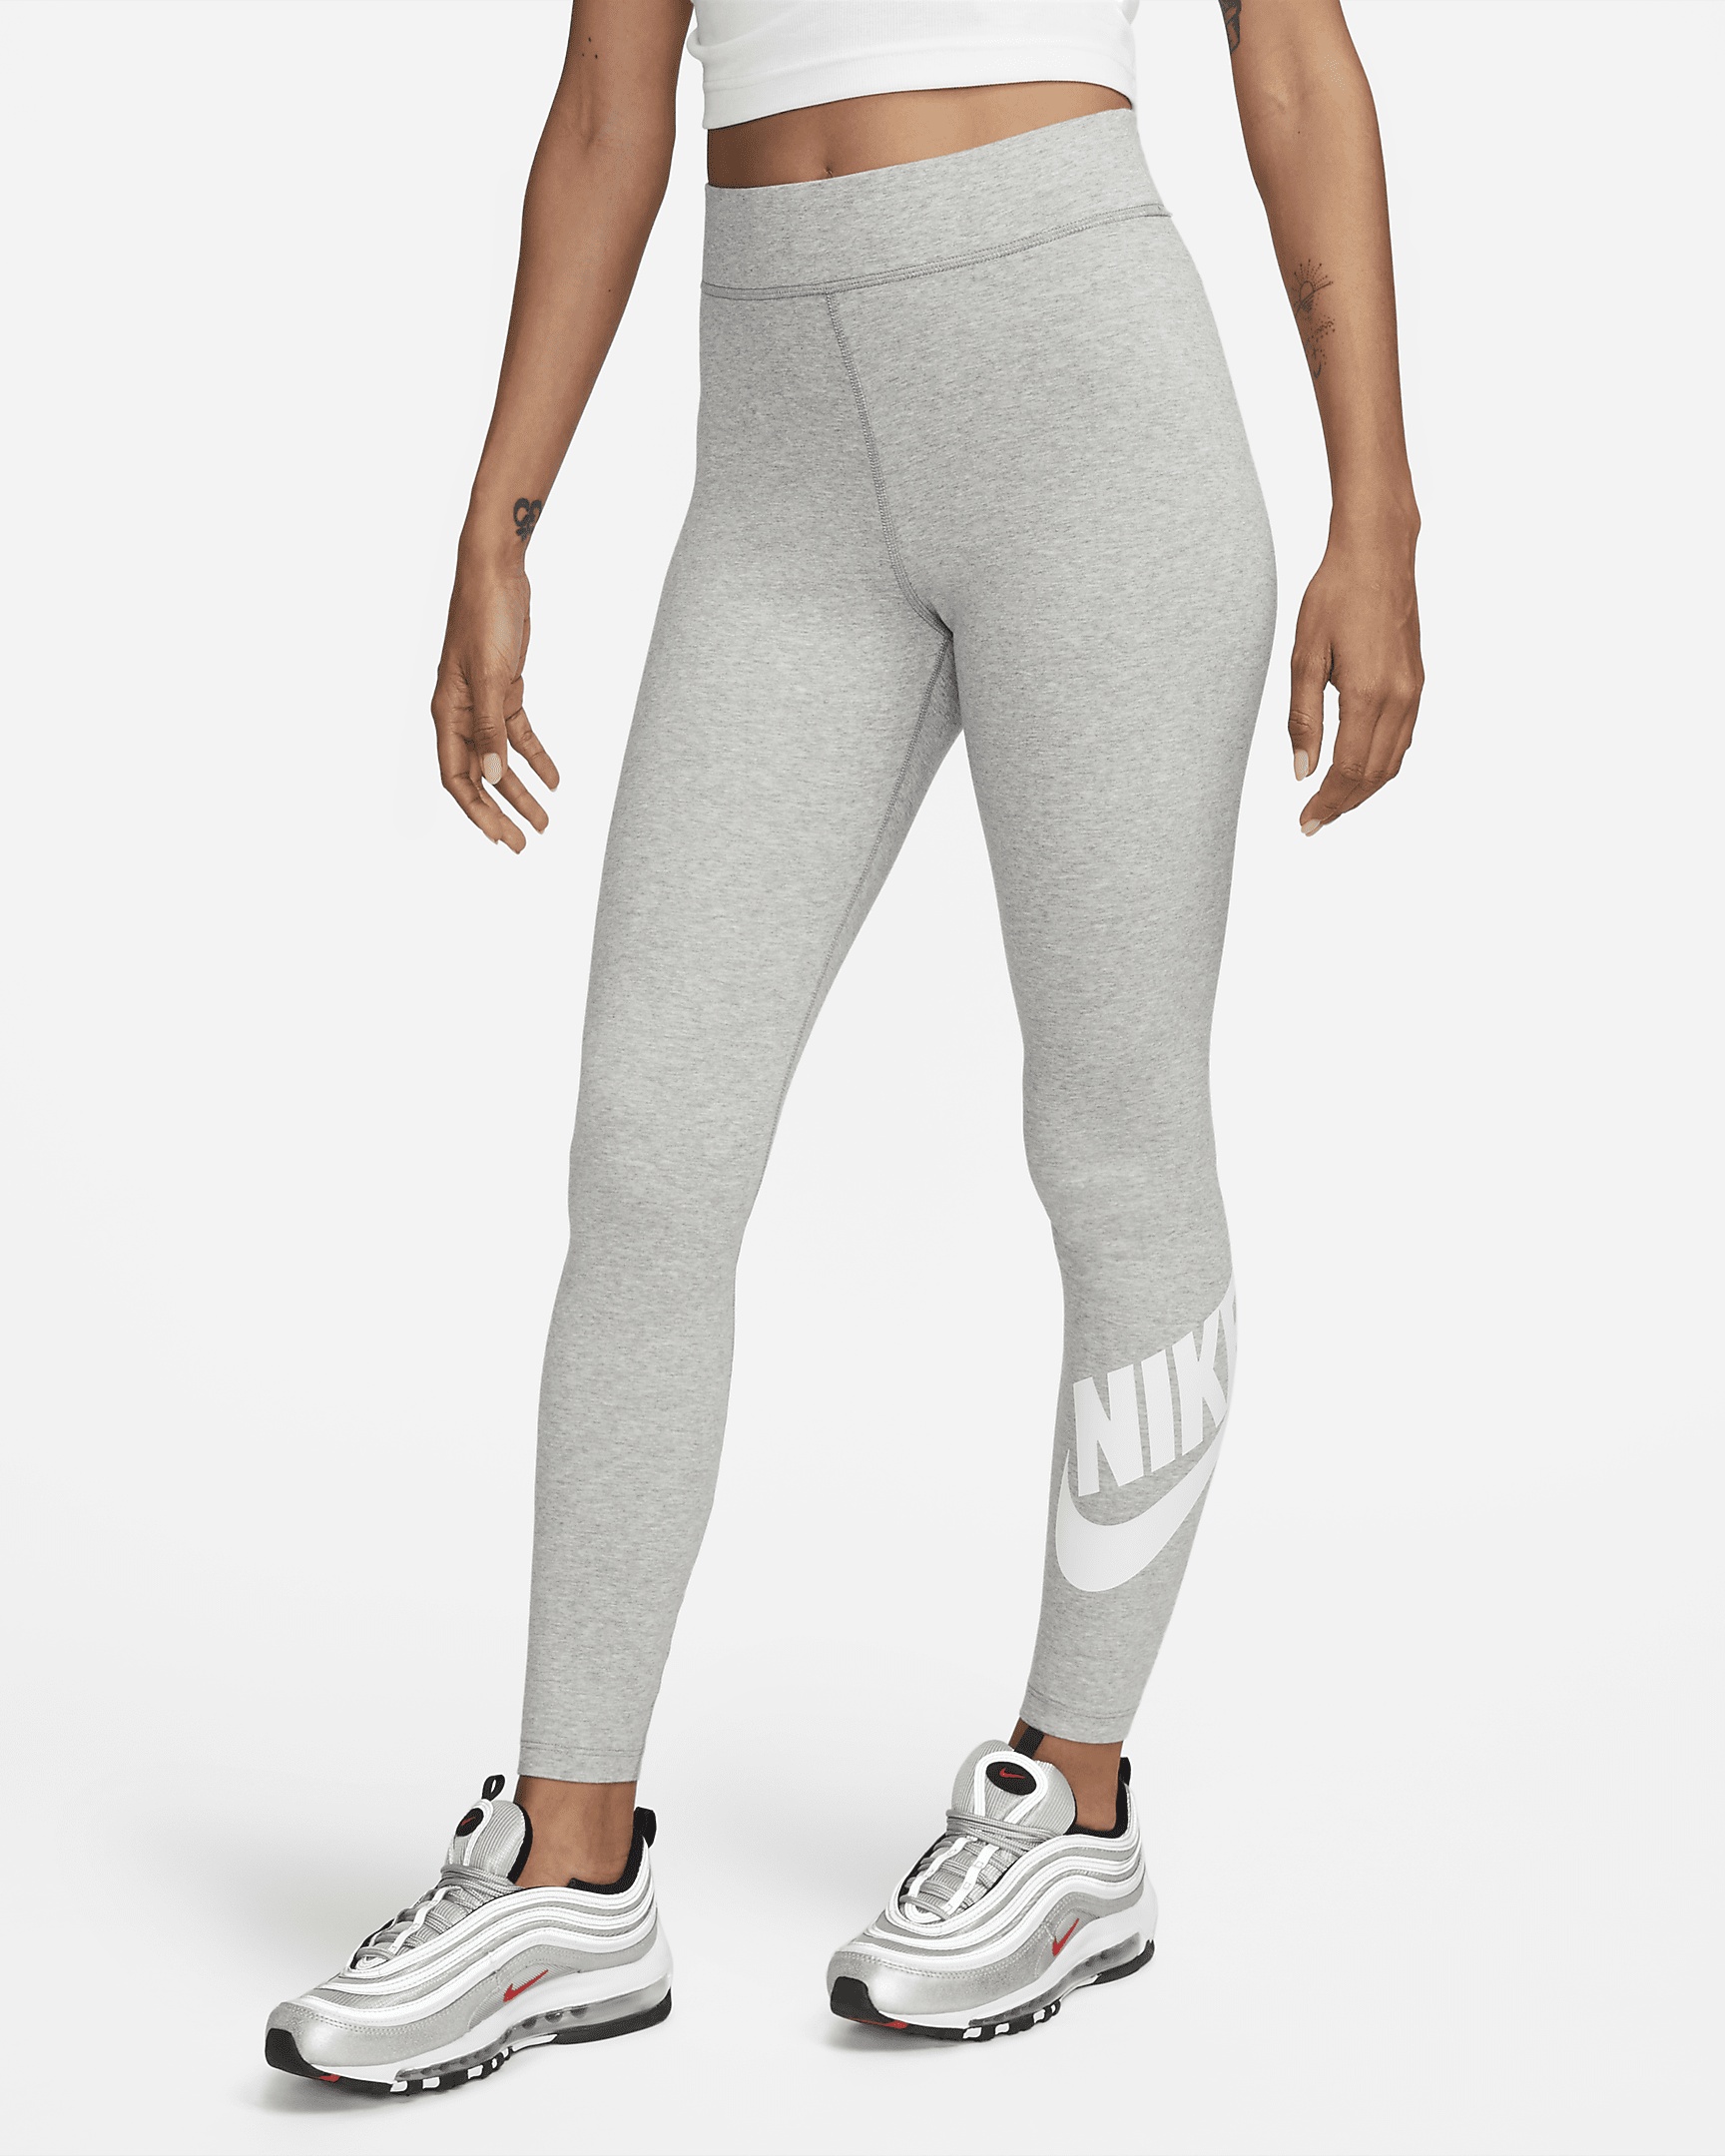 Women's Nike Sportswear Classics High-Waisted Graphic Leggings - 1